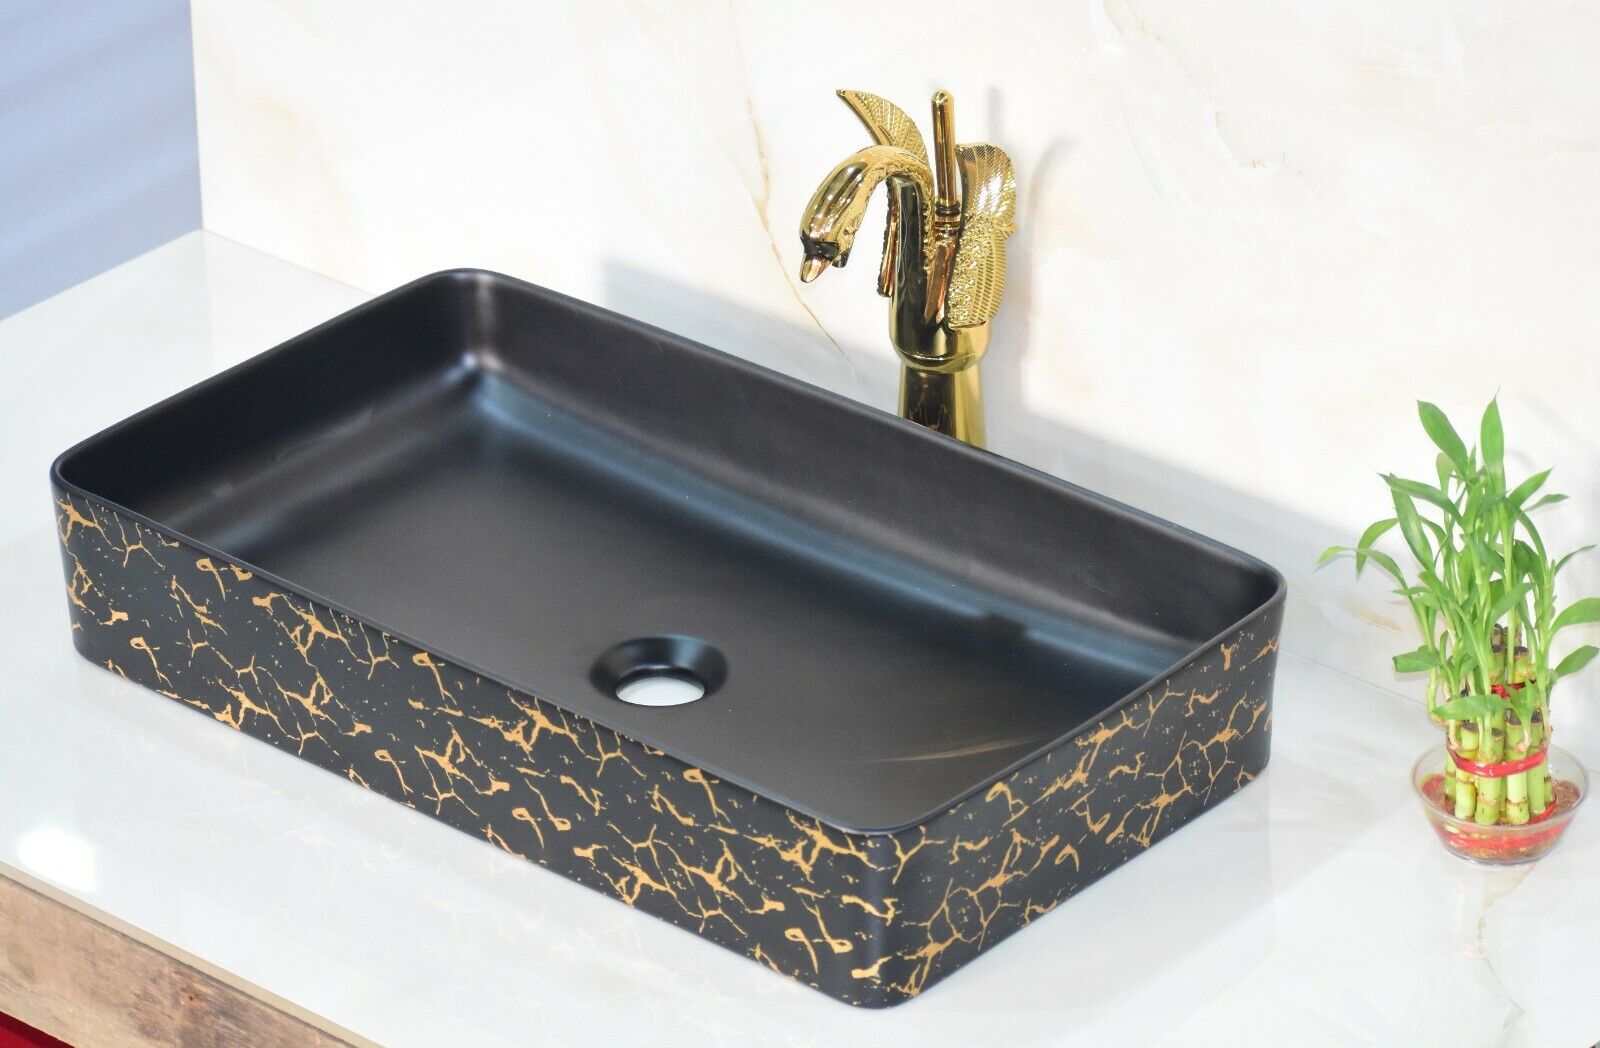 InArt Ceramic Oval Shape Above Counter Top Wash Basin Bathroom Porcelain Vessel Sink Bowl For Lavatory/Bathroom 61 x 33.5 x 11 Cm (Gold Black) - InArt-Studio-USA